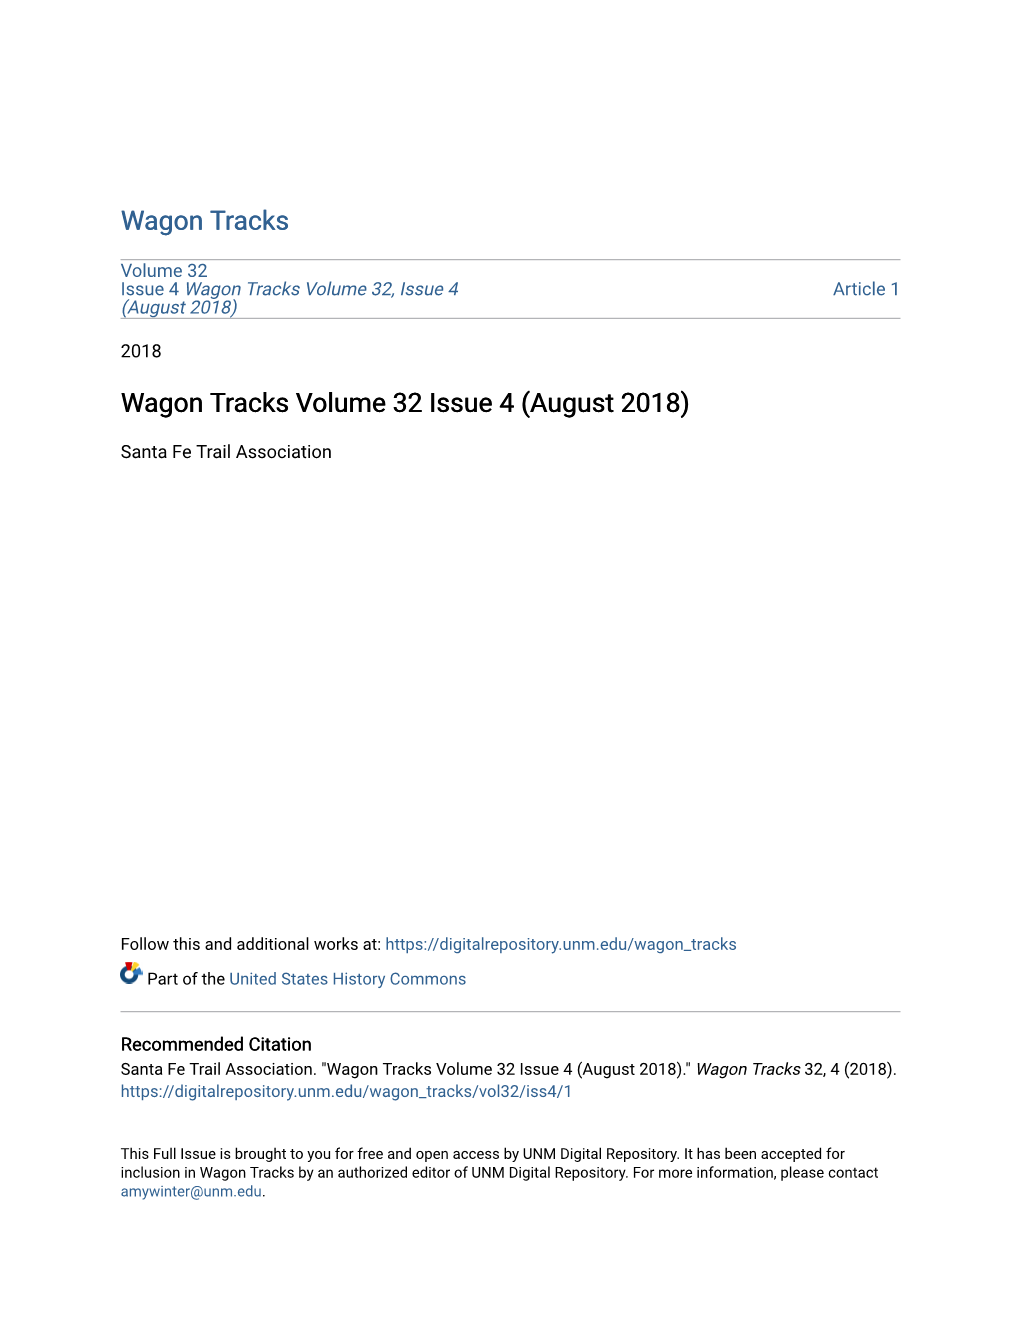 Wagon Tracks Volume 32 Issue 4 (August 2018)